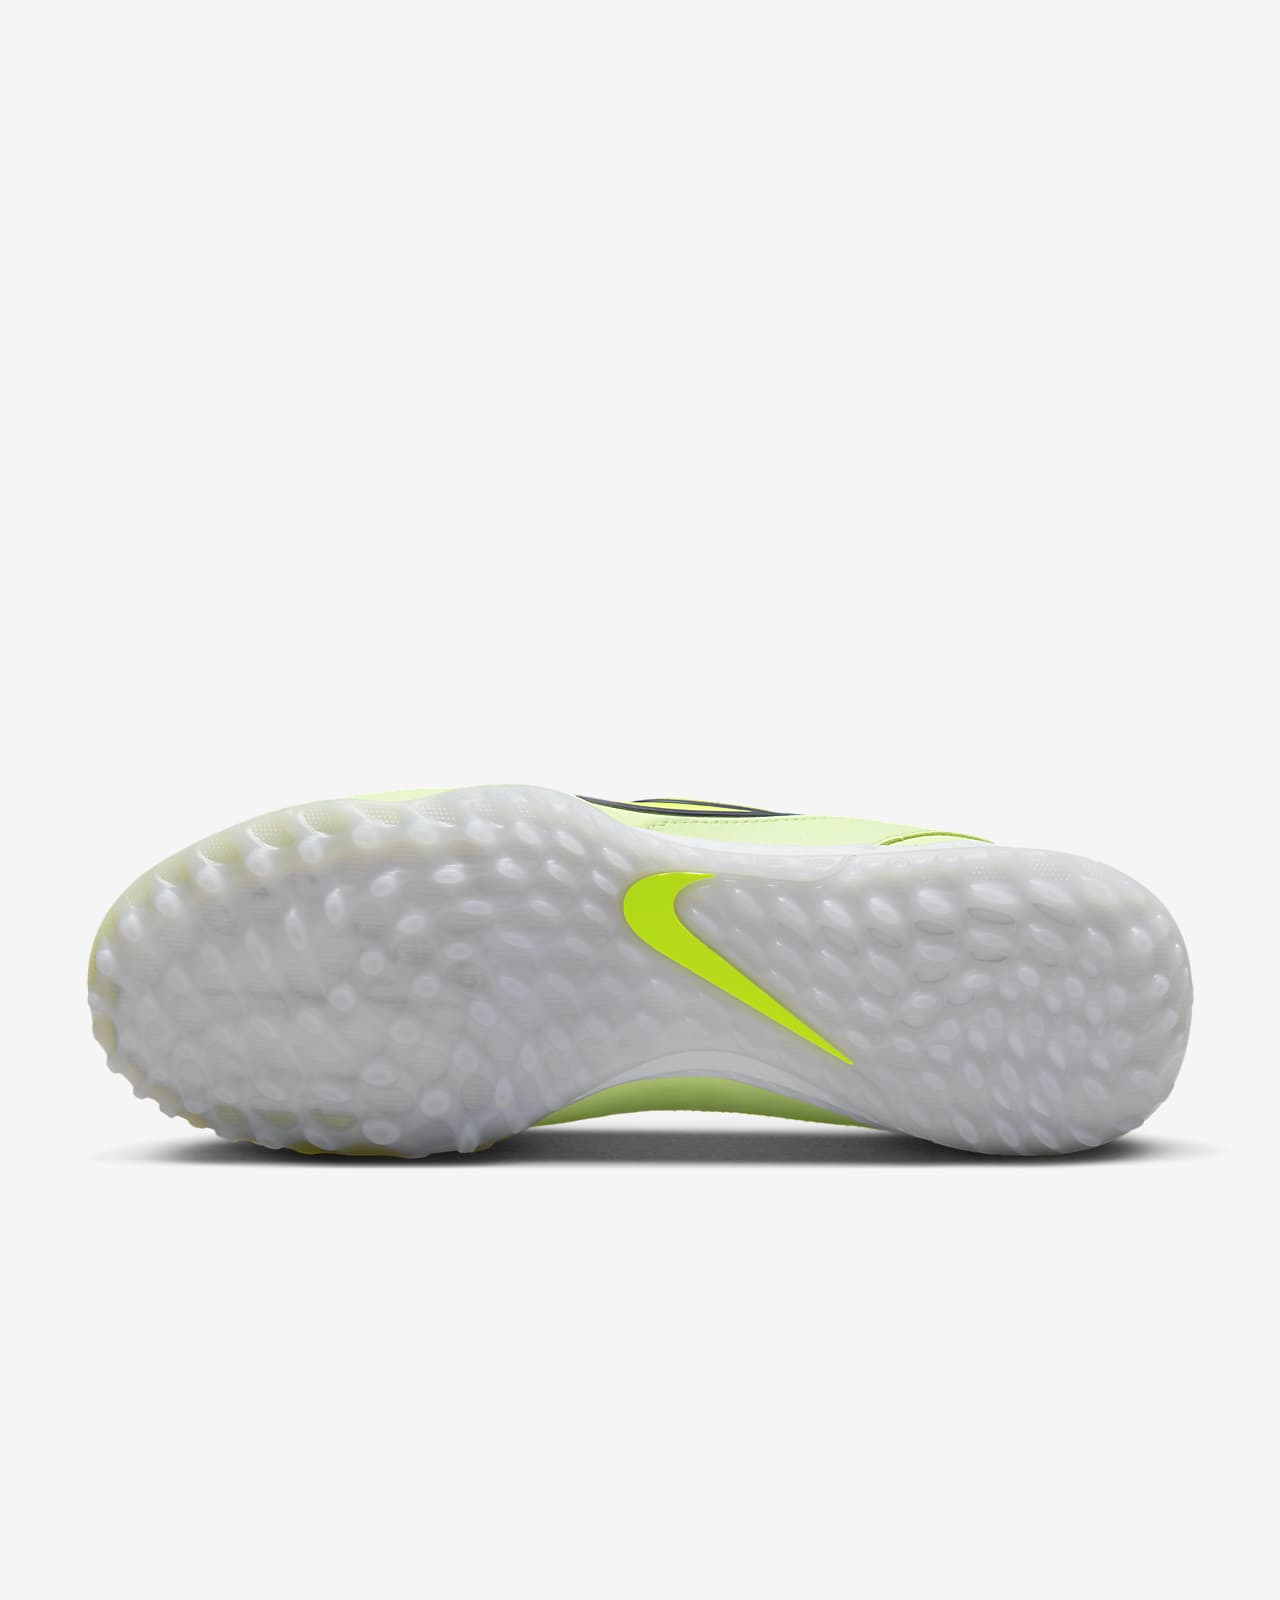 Nike React Tiempo 9 Pro TF Soccer Shoe.